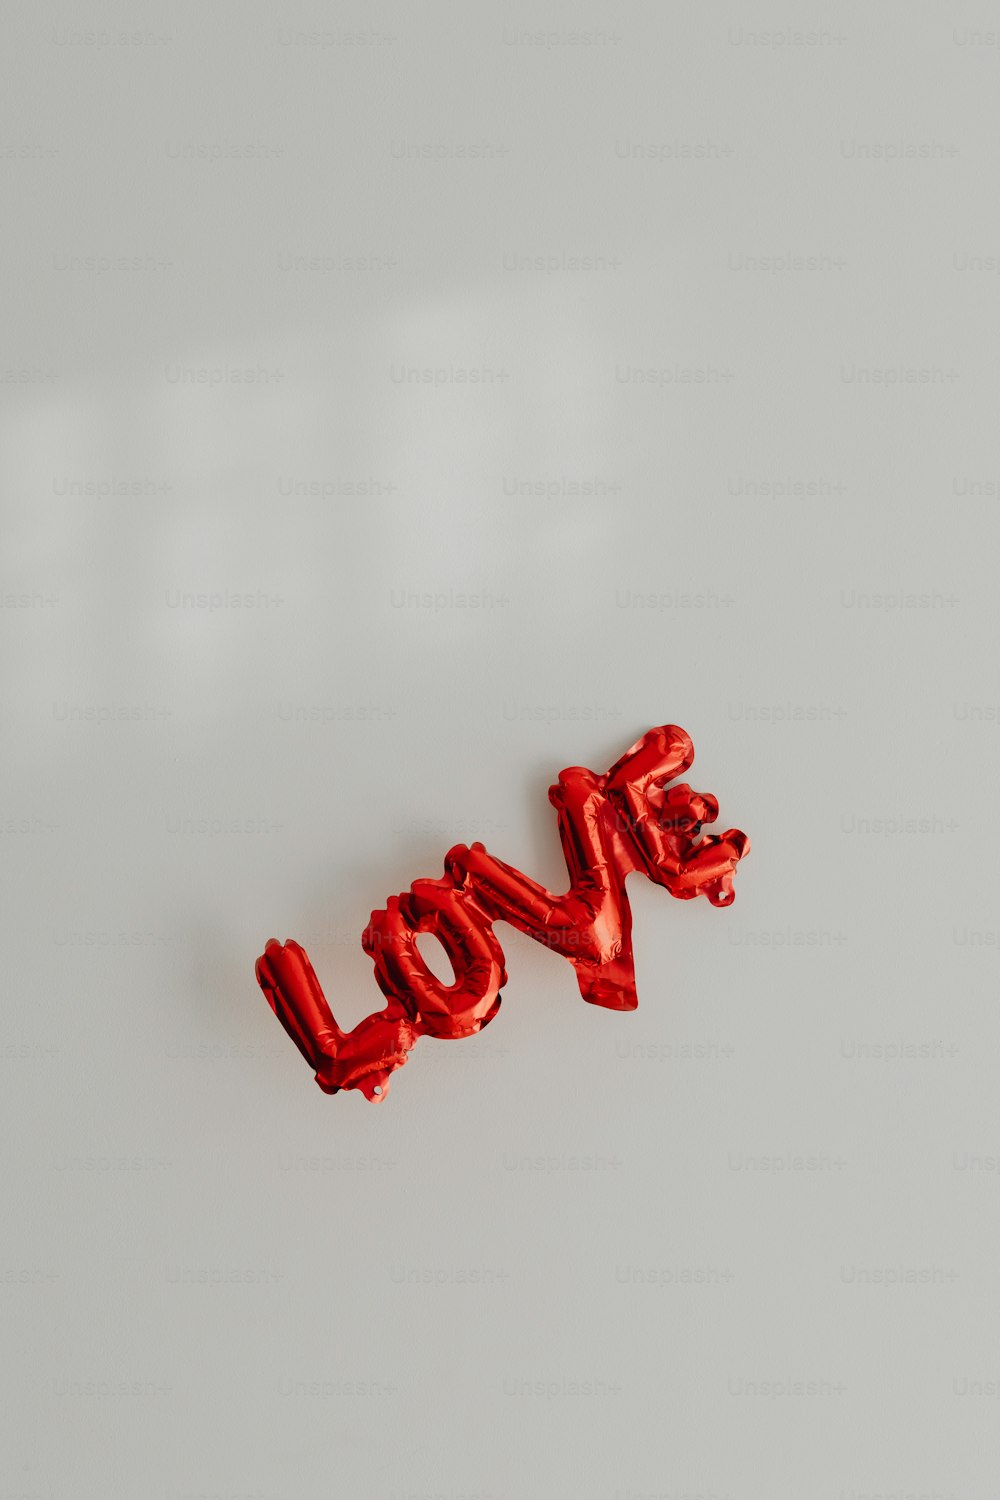 La parola amore scritta da caramelle su una superficie bianca